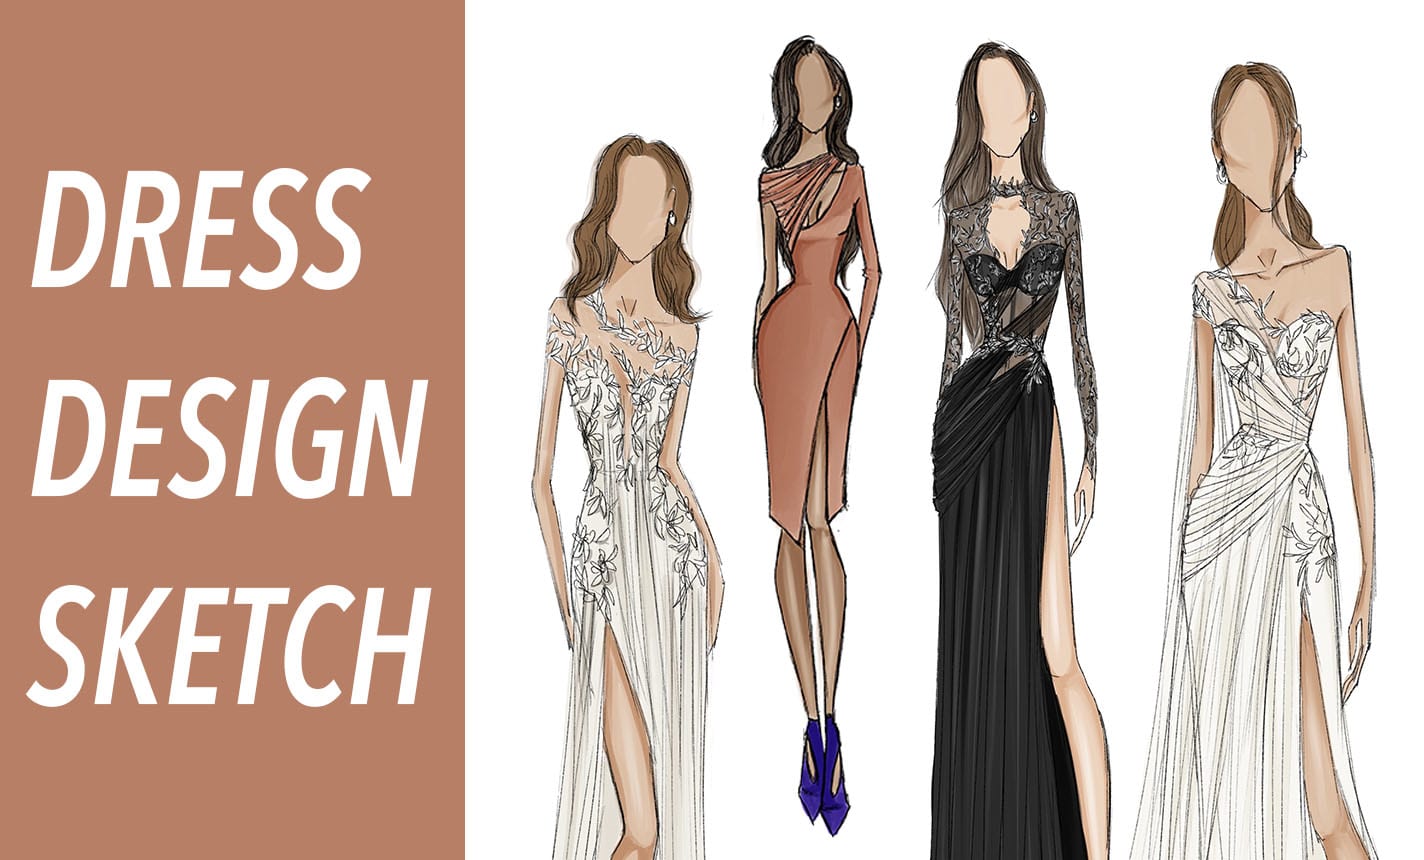 Dress Sketch Images - Free Download on Freepik